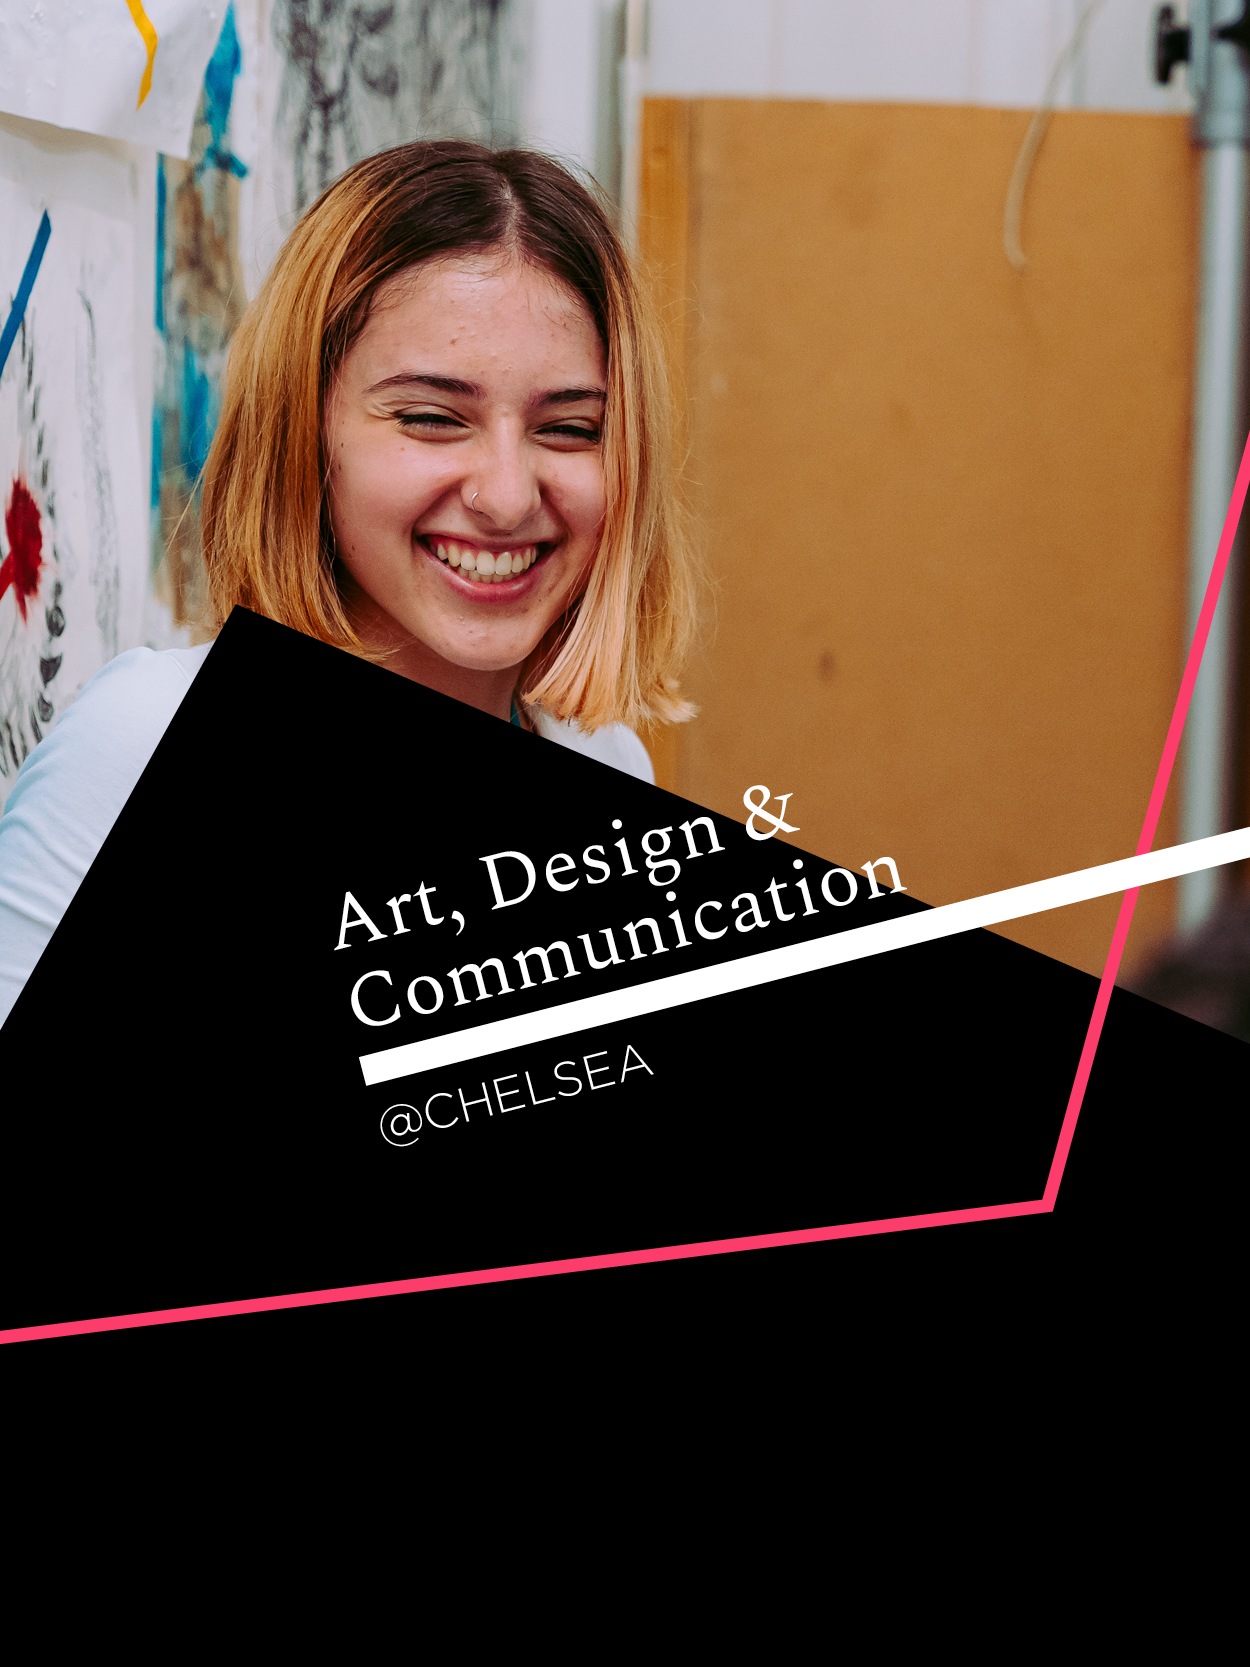 Art, Design and Communication